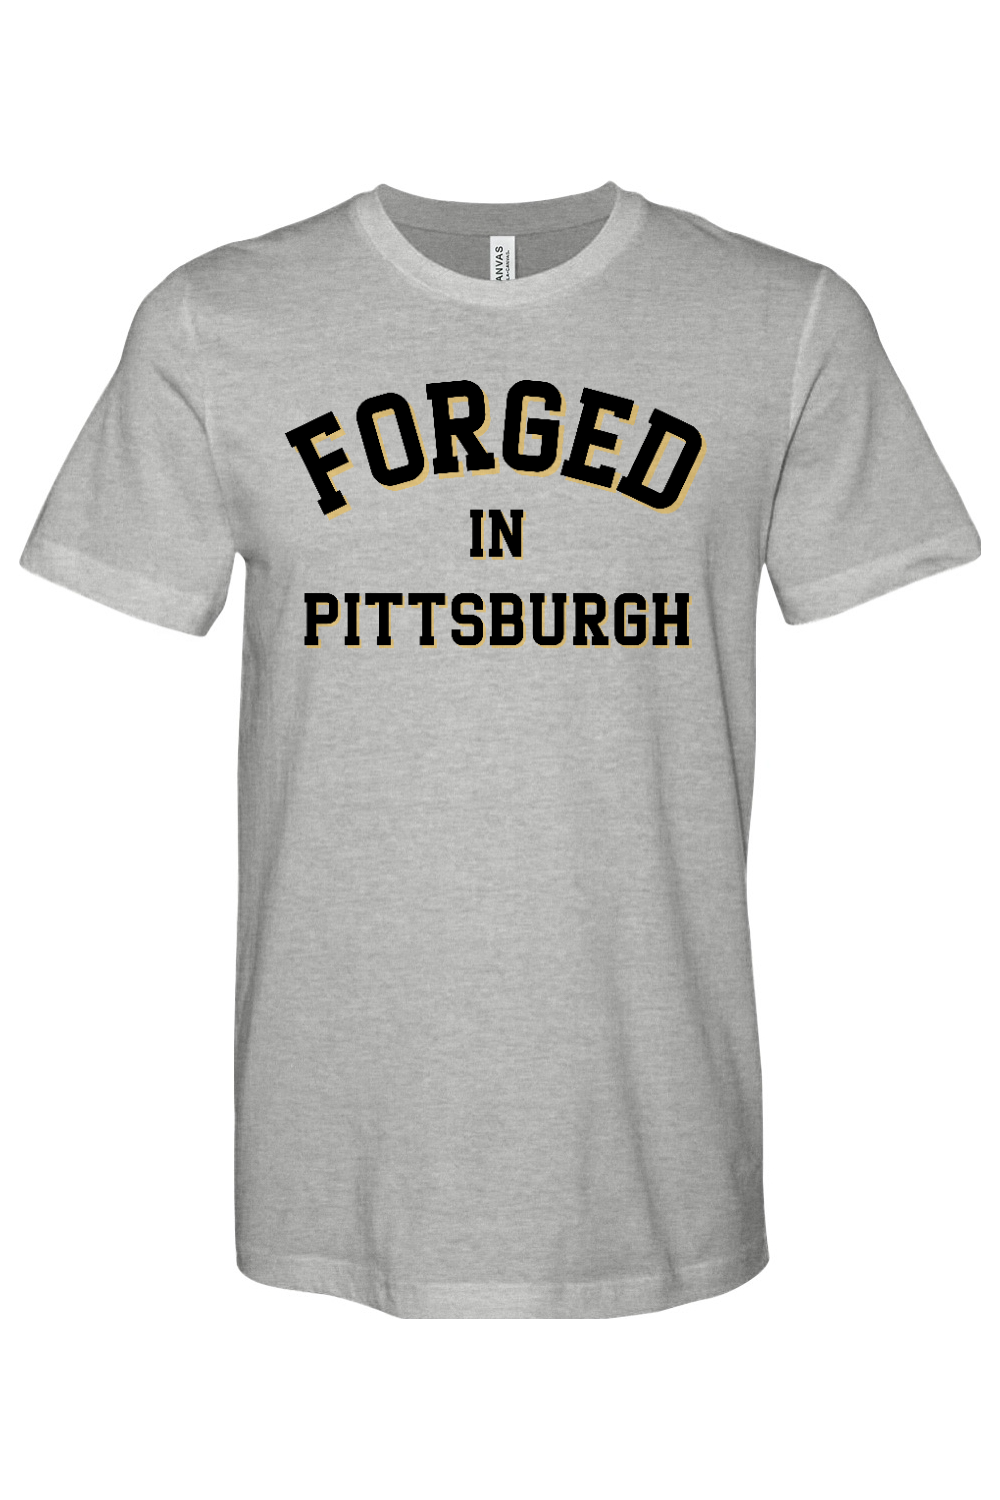 Forged in Pittsburgh - Yinzylvania